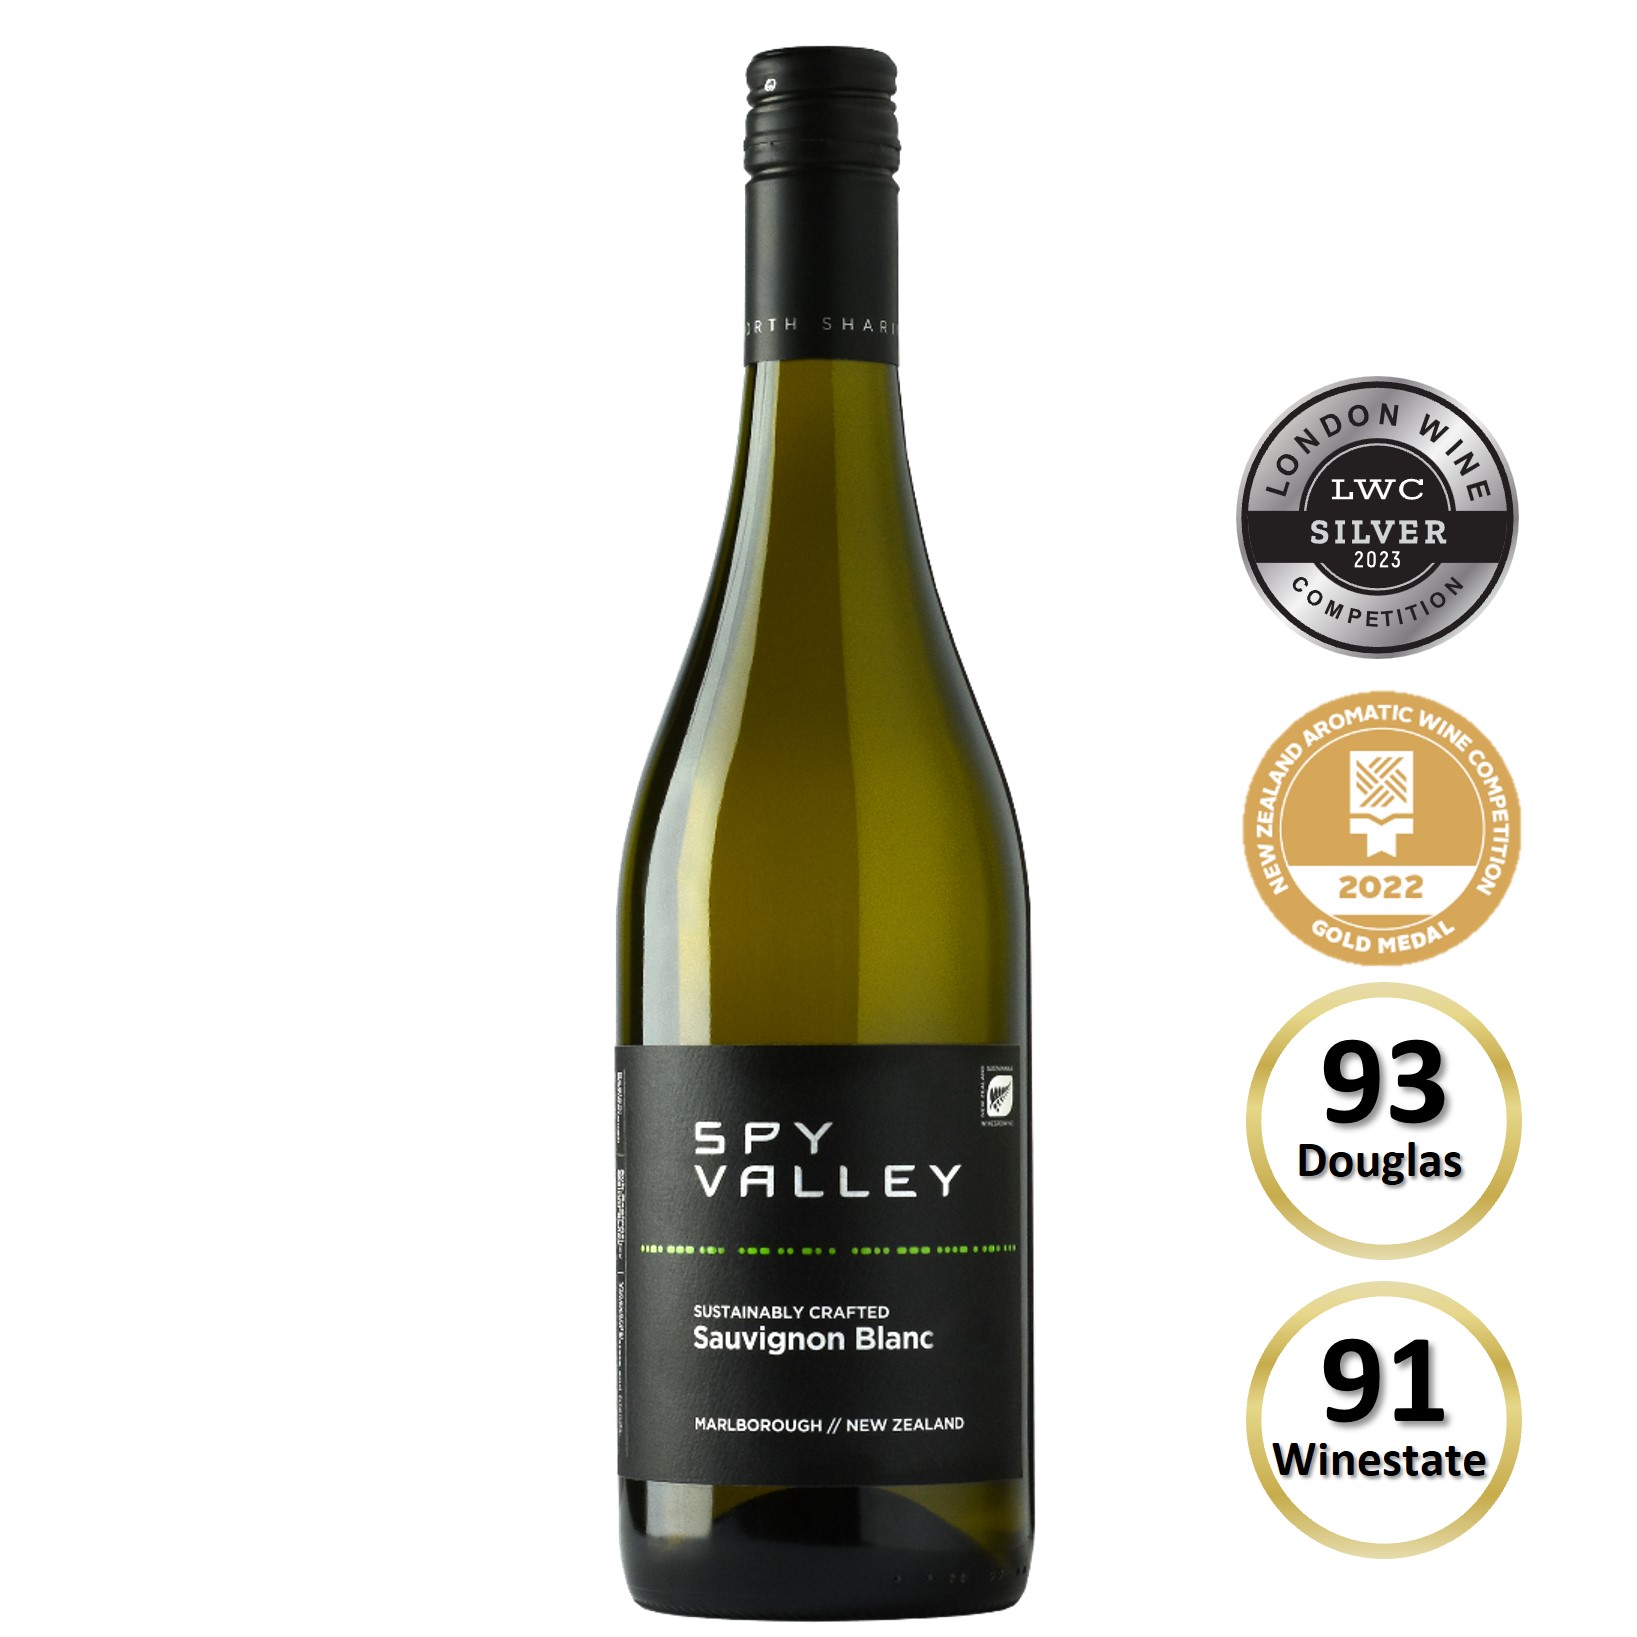 Spy Valley Sauvignon Blanc 2022 Weinboutique - Neuseeland